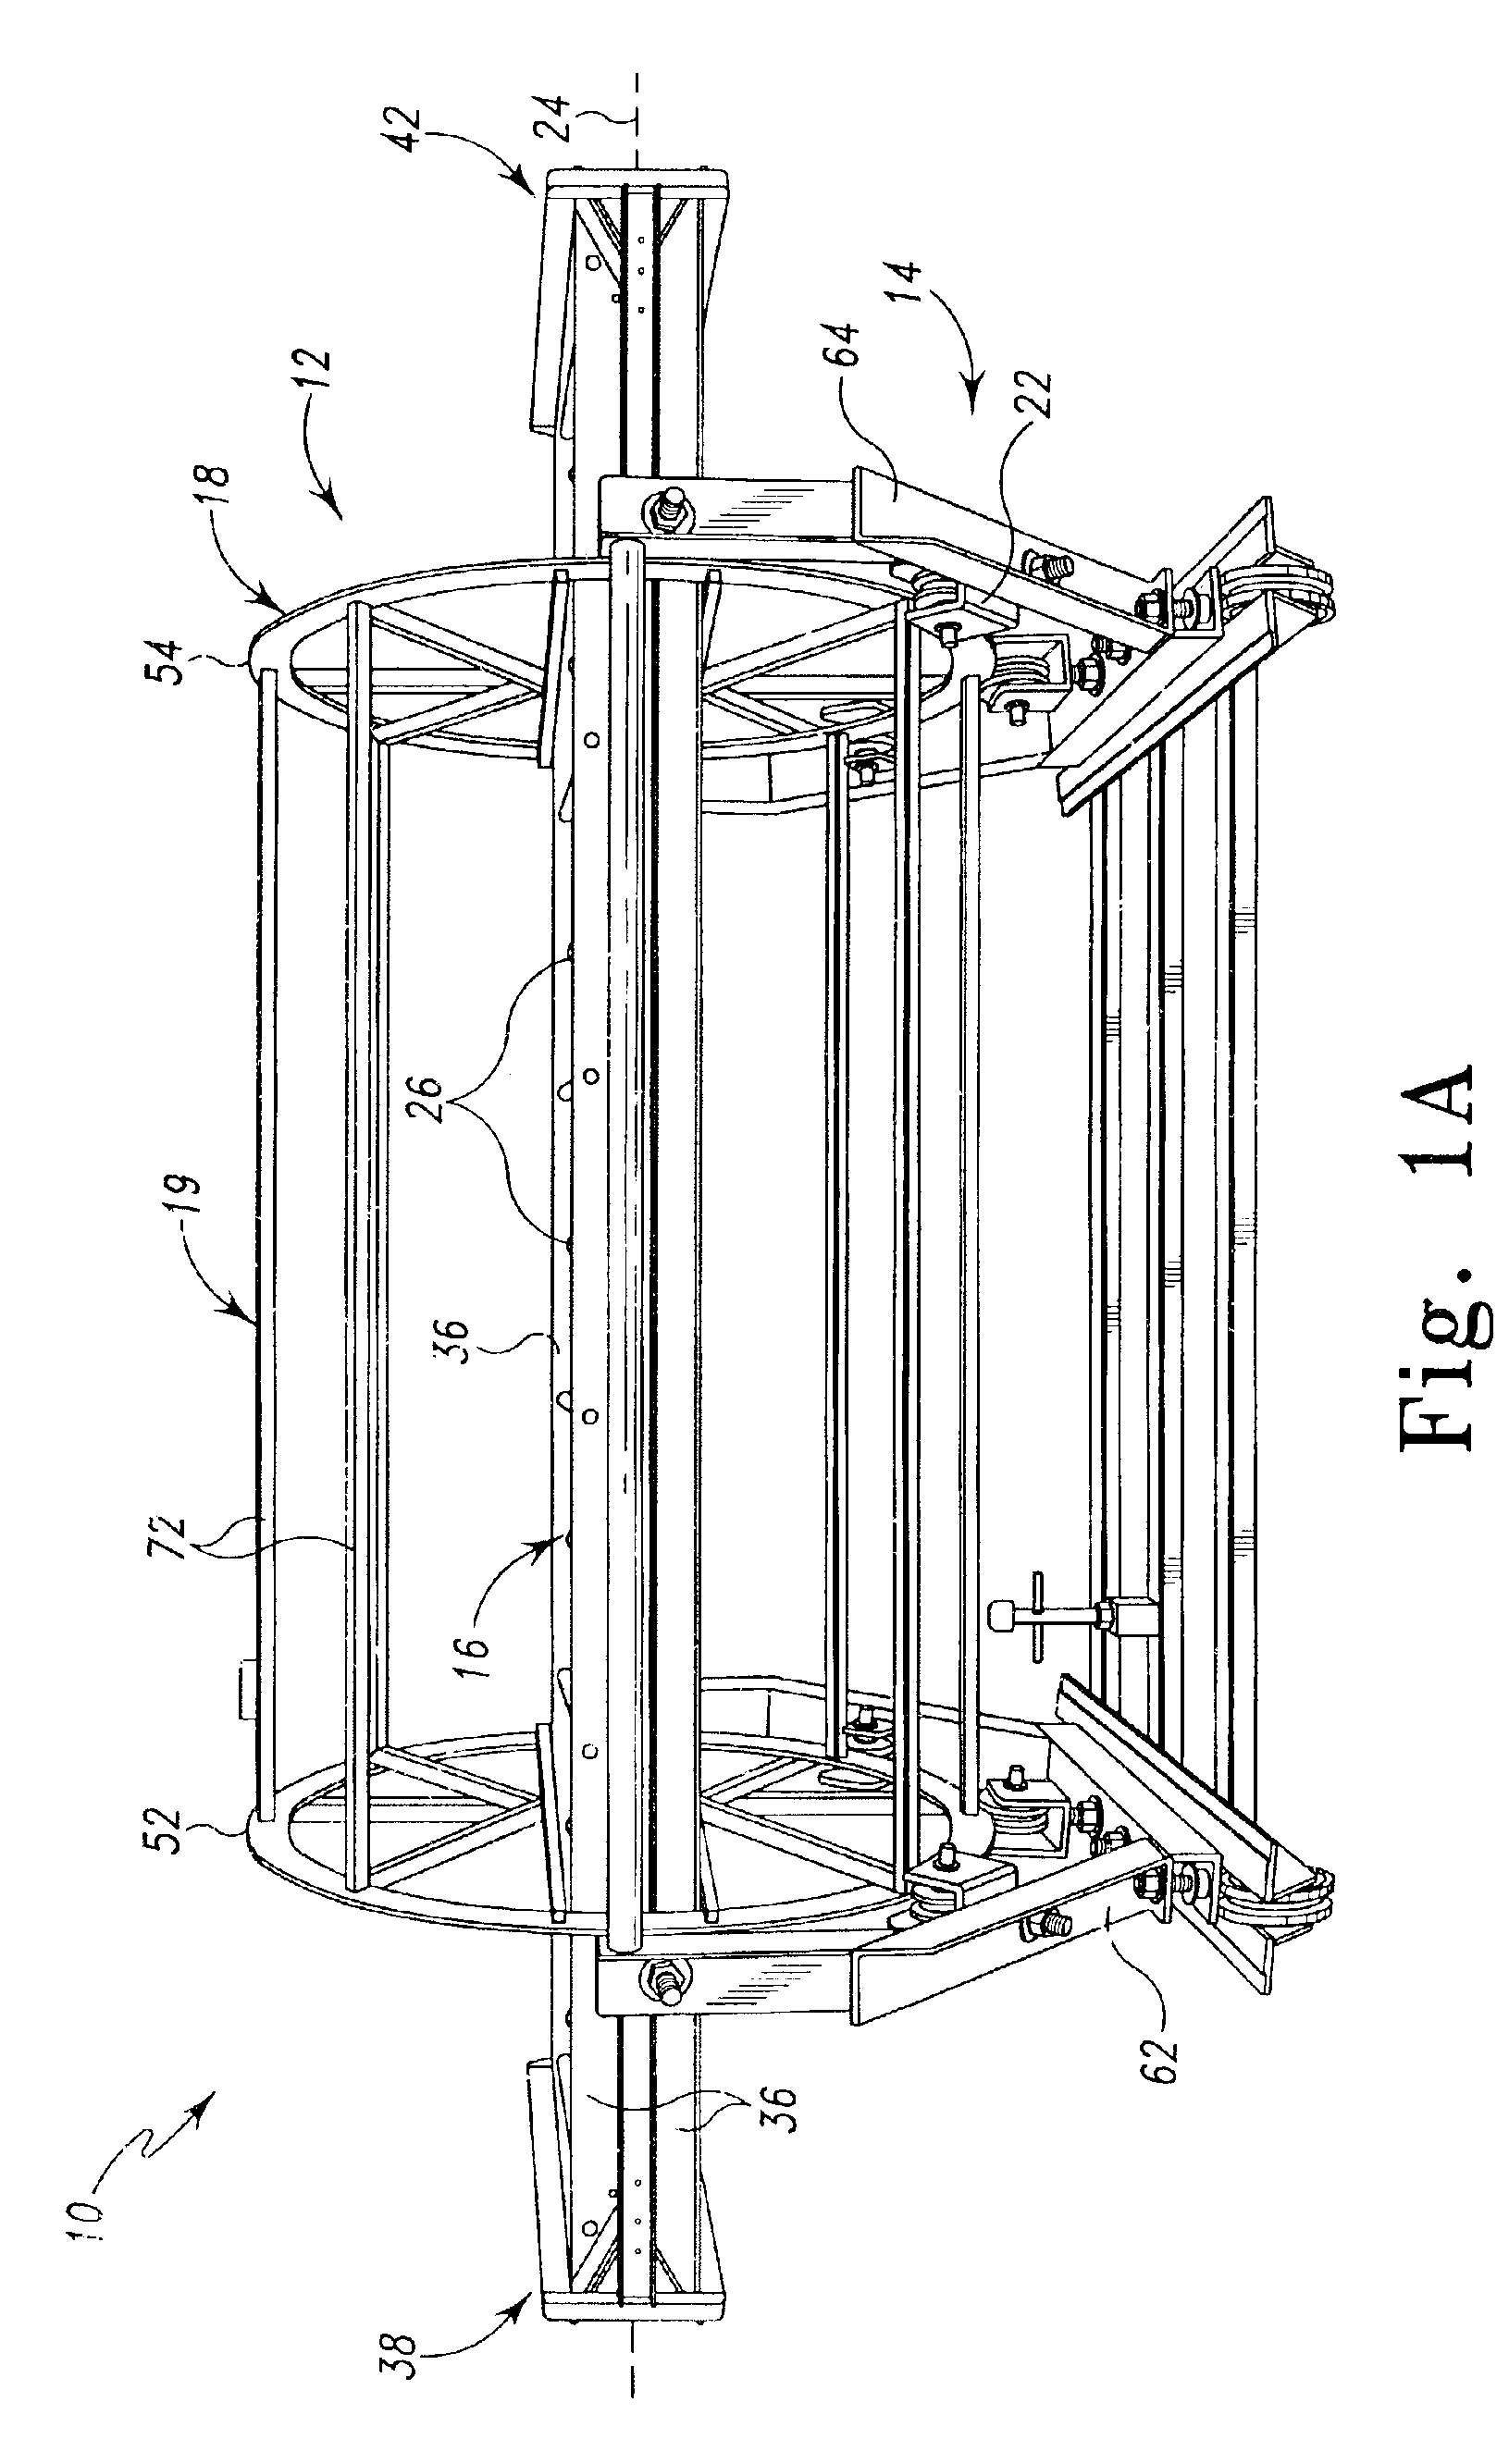 Panel turning apparatus